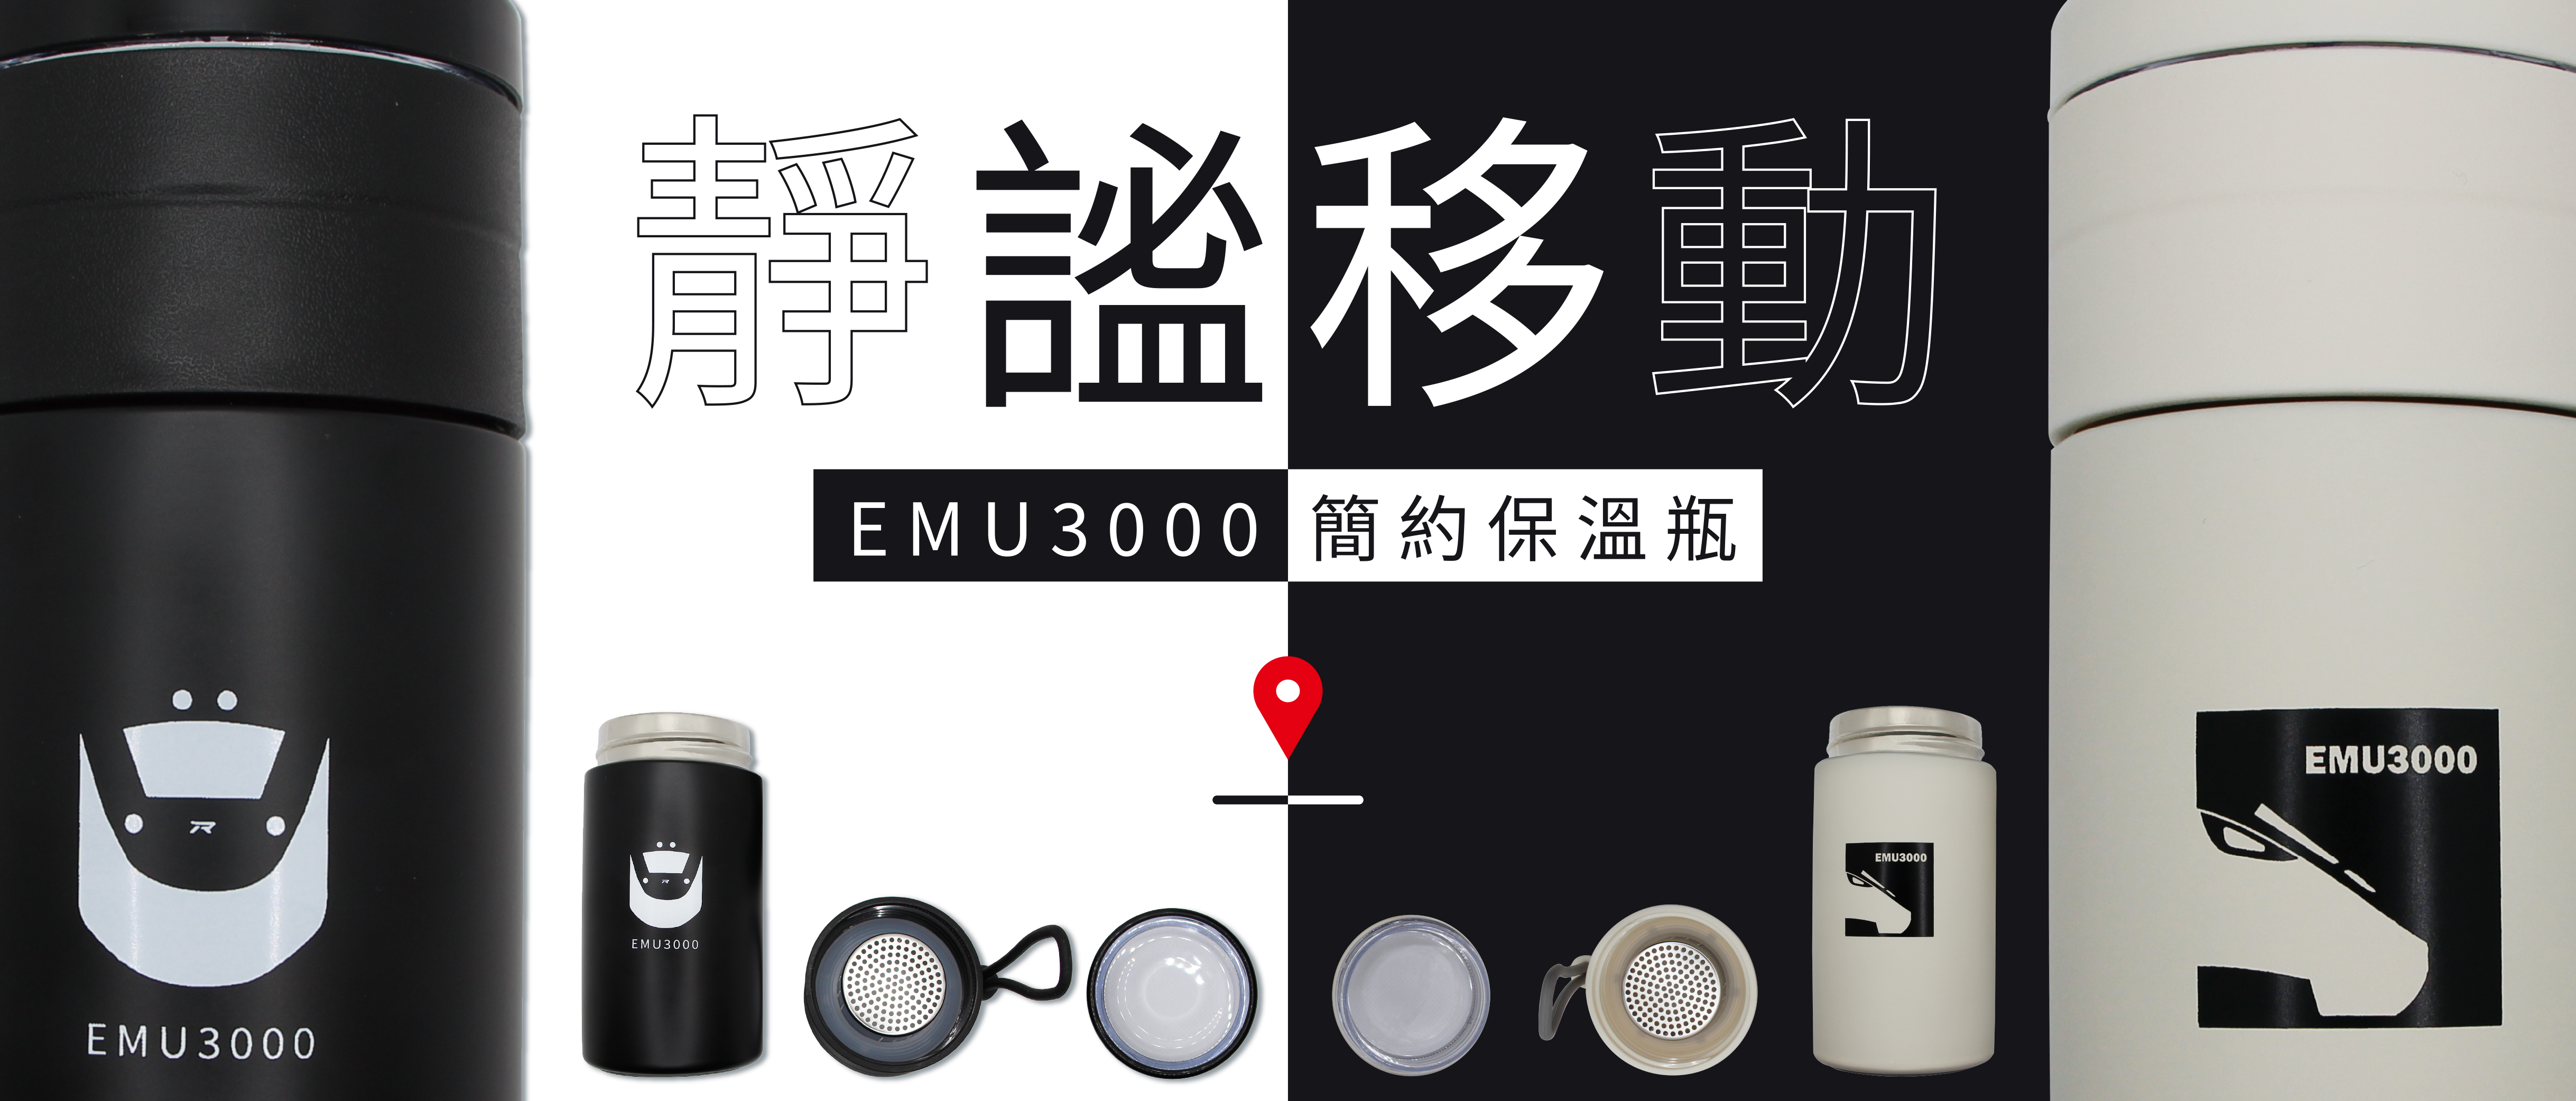 EMU3000 series